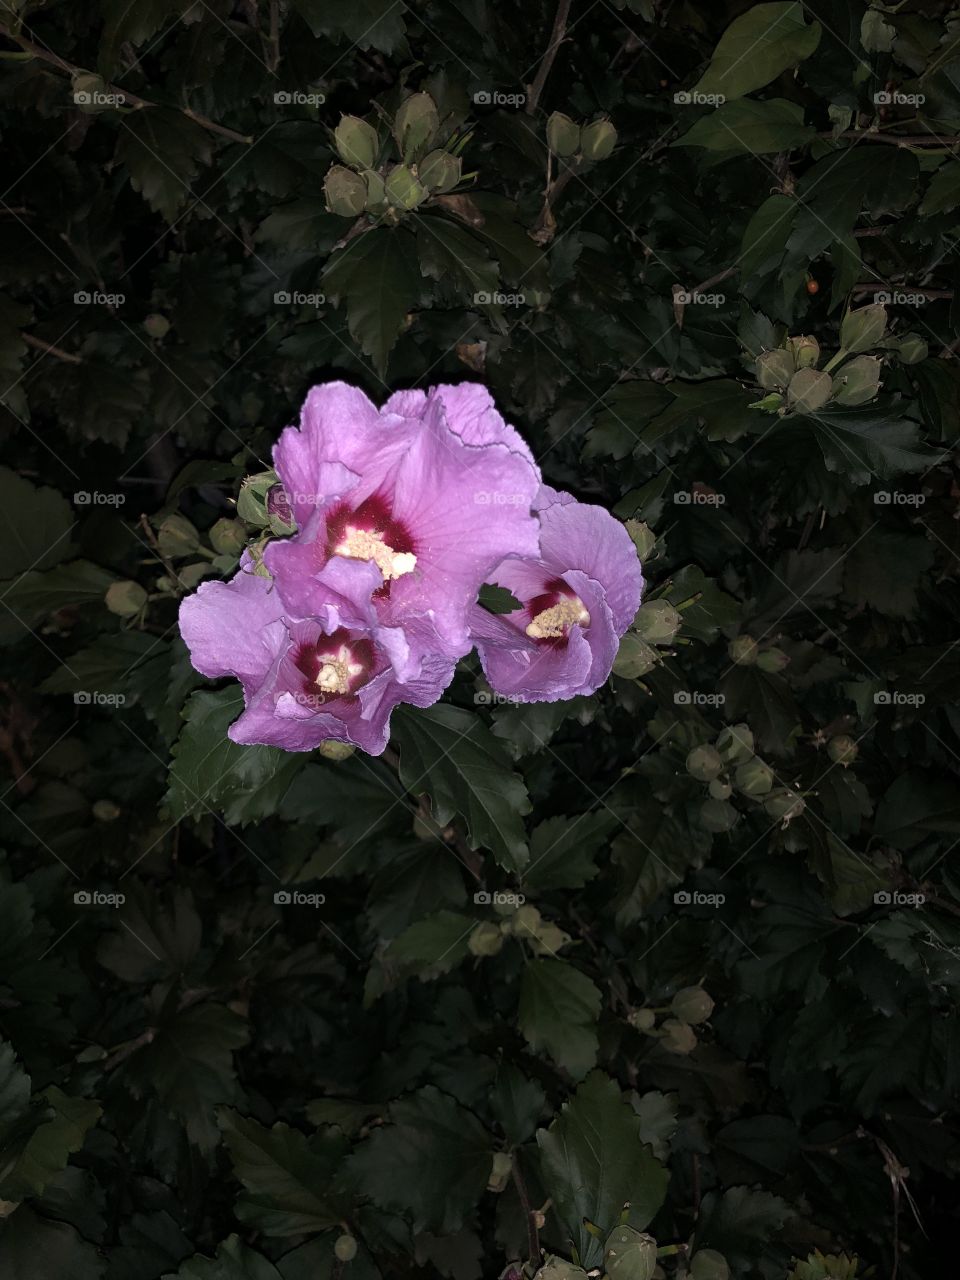 Nighttime flower